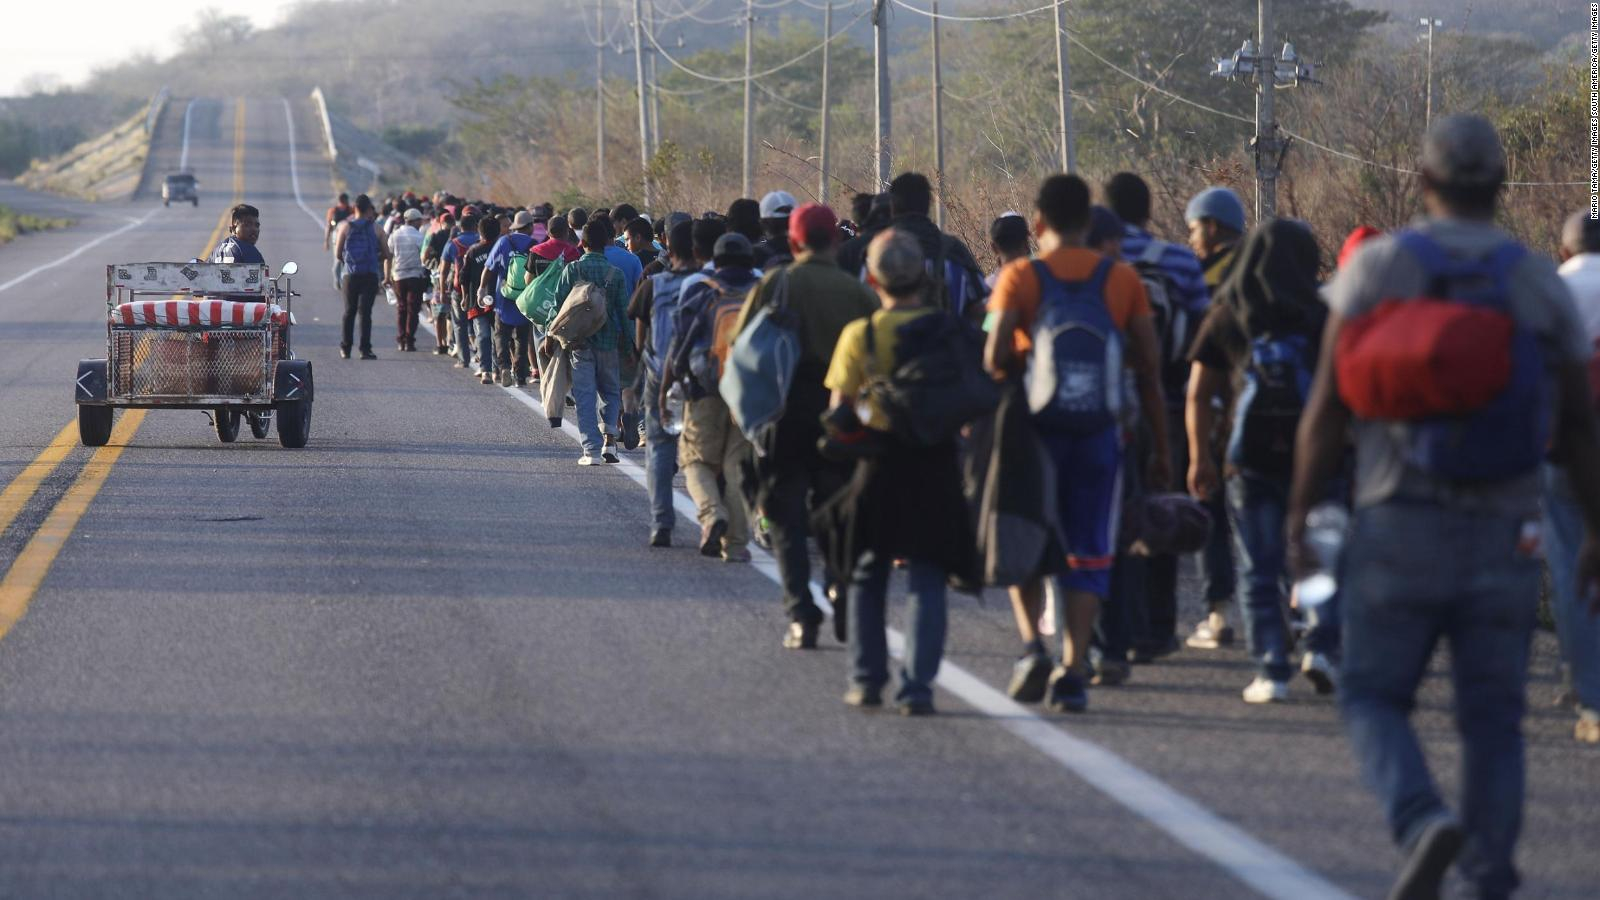 190201190736 amnistia migrantes caravana tijuana frontera estados unidos reneaum entrevista perspectivas mexico 00010809 full 169